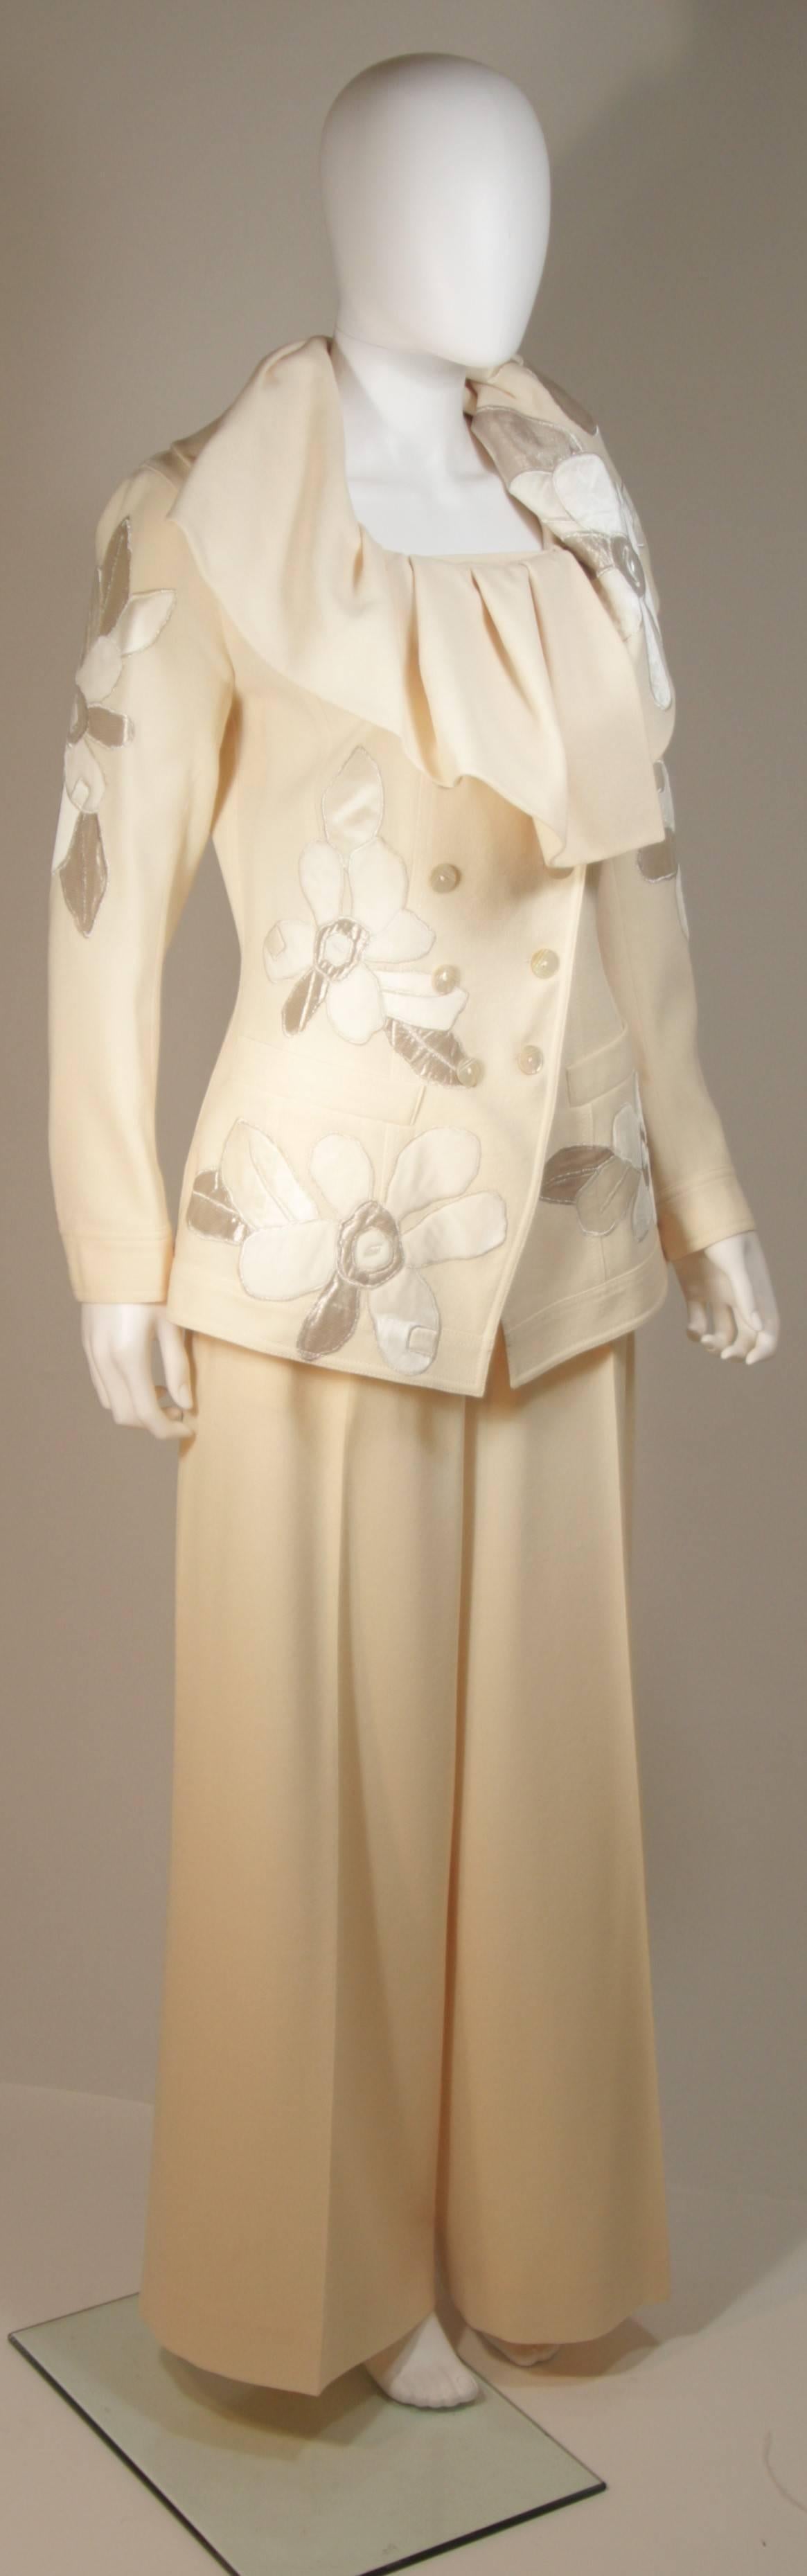 Women's JOHN GALLIANO Ivory Silk Pant Suit with Metallic Applique Size 44 42